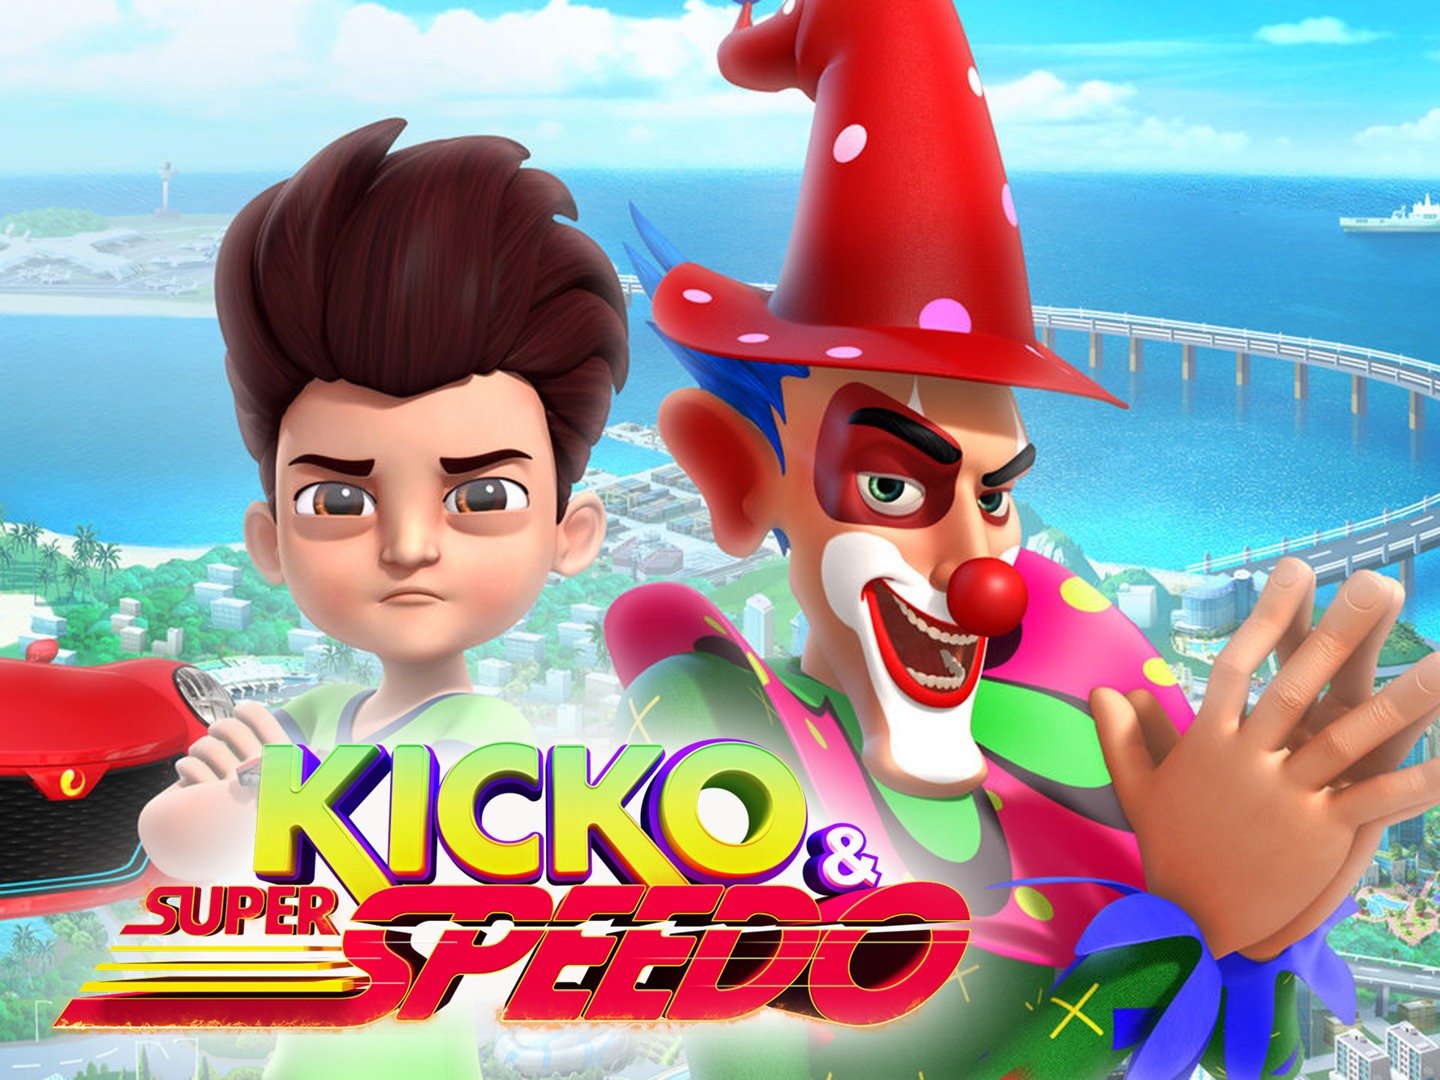 Kicko & Super Speedo - Rotten Tomatoes